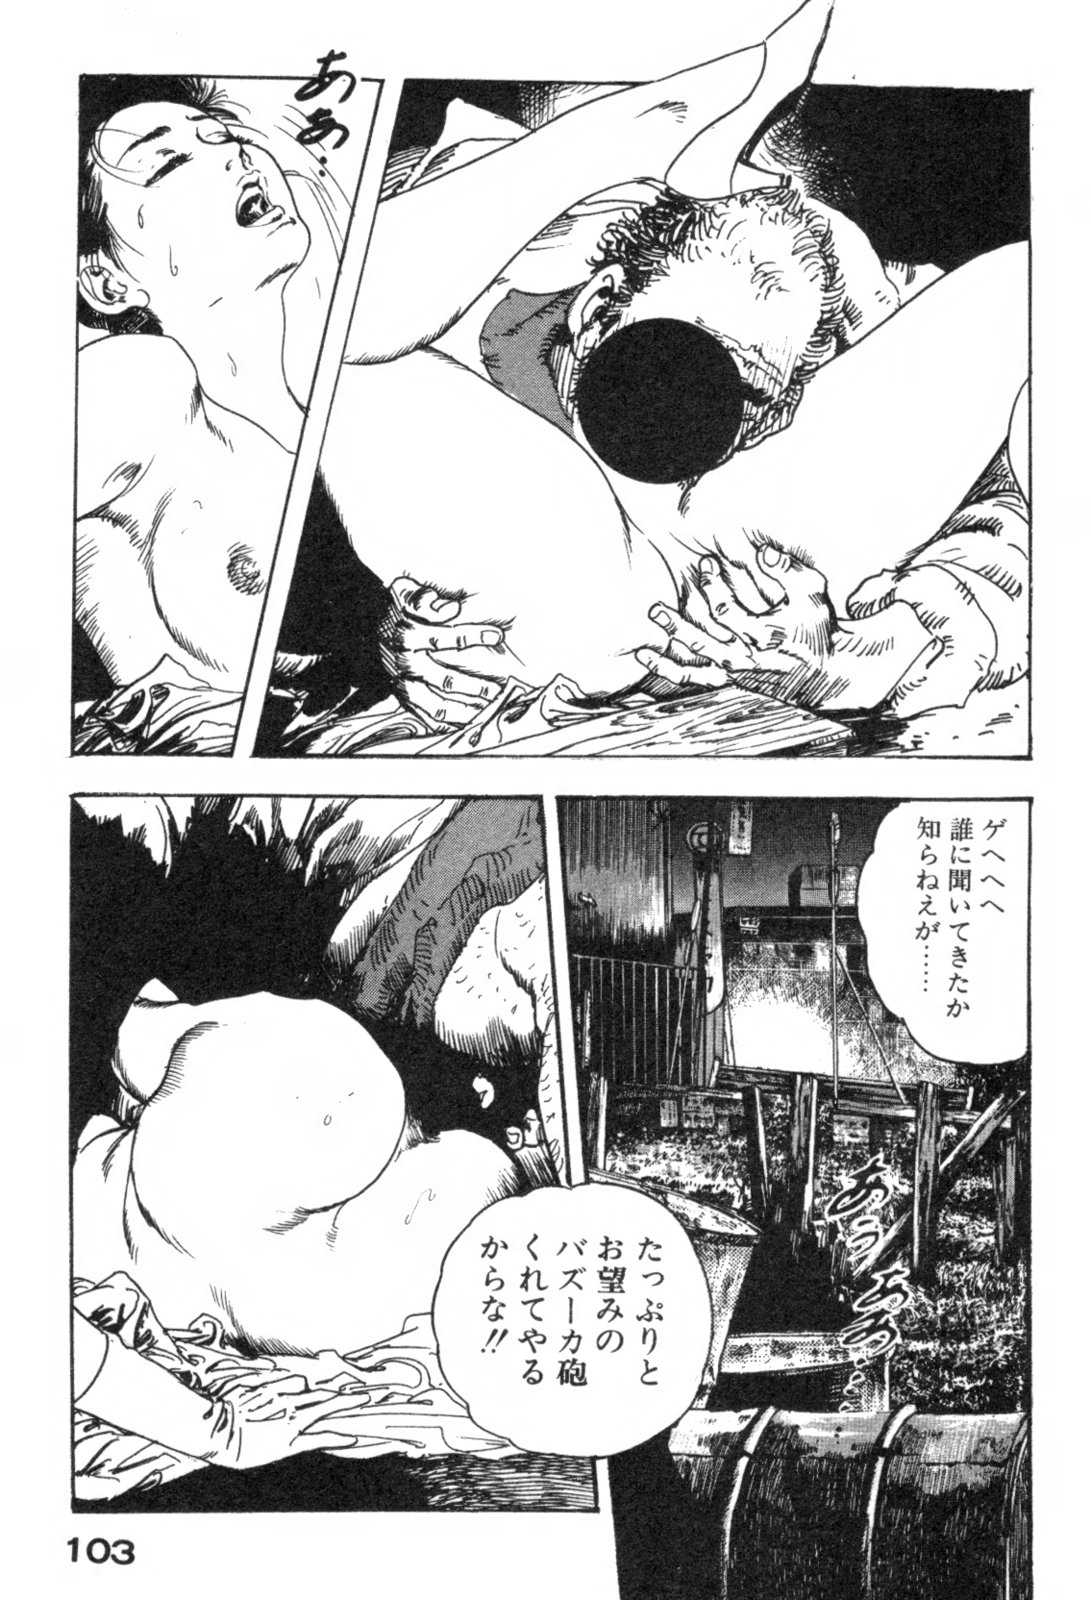 Wife Affair by Ken Tsukikiage 